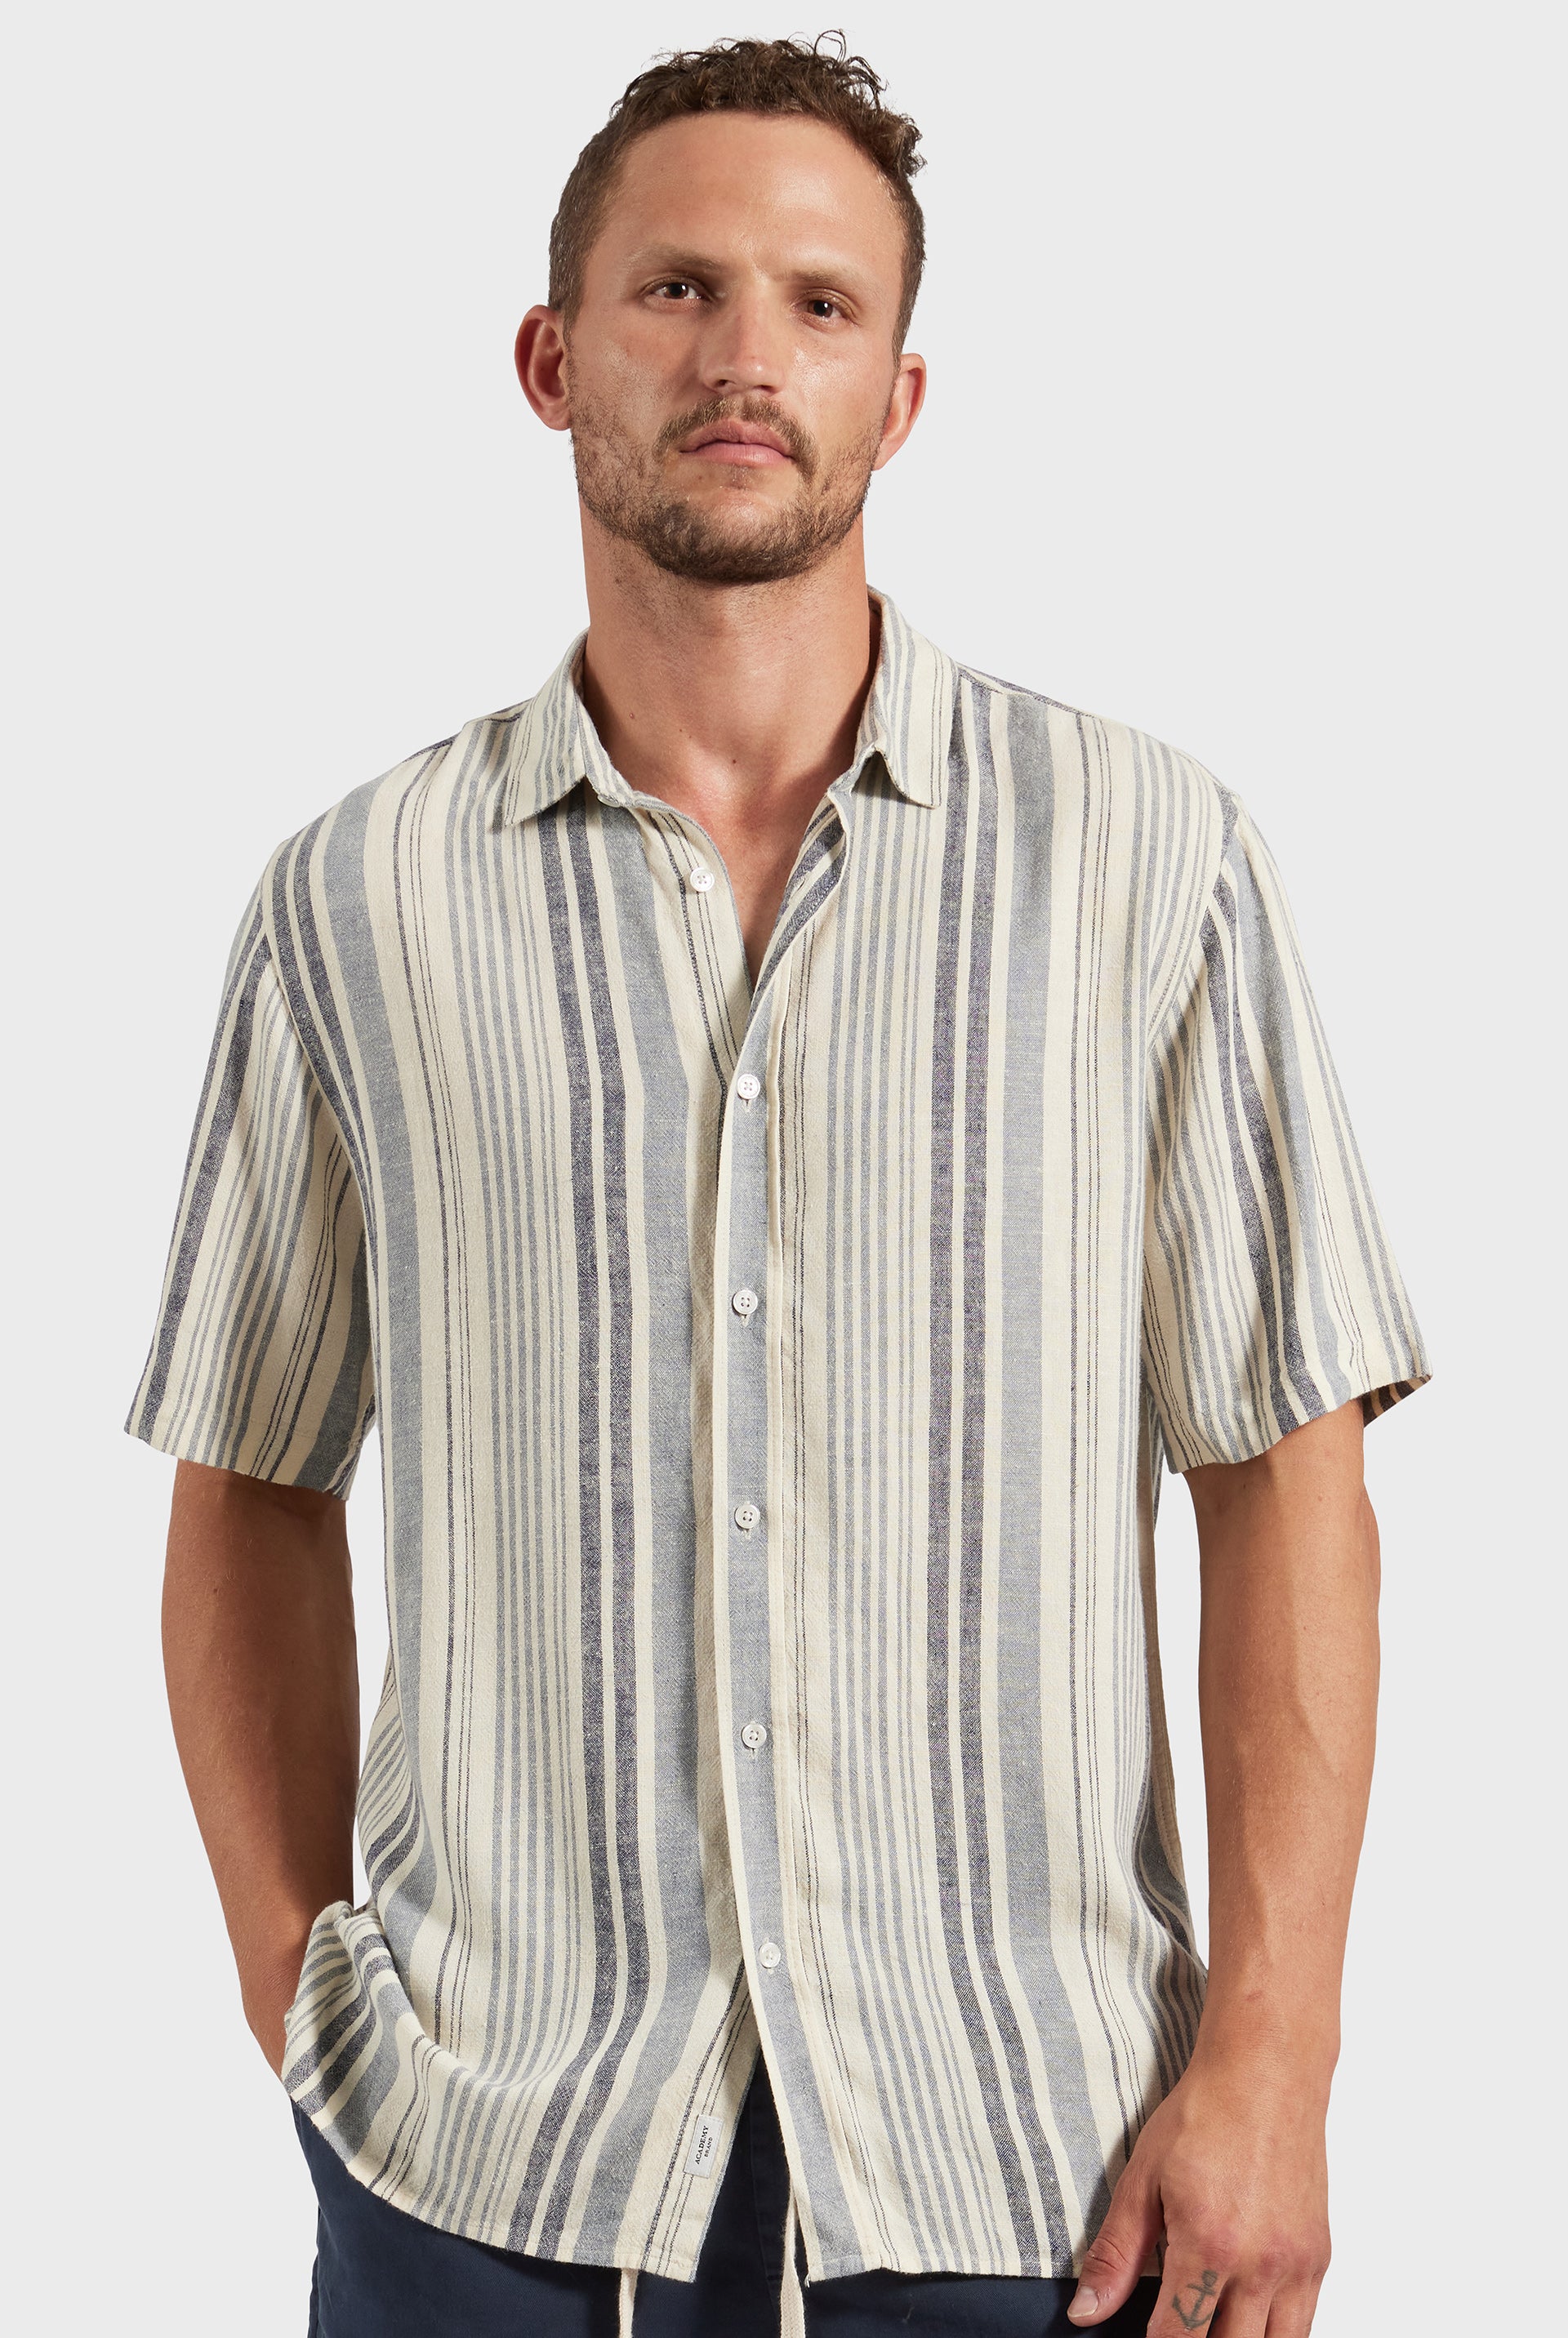 Clothing - Paint with Josh Women's Short Sleeve T-Shirt